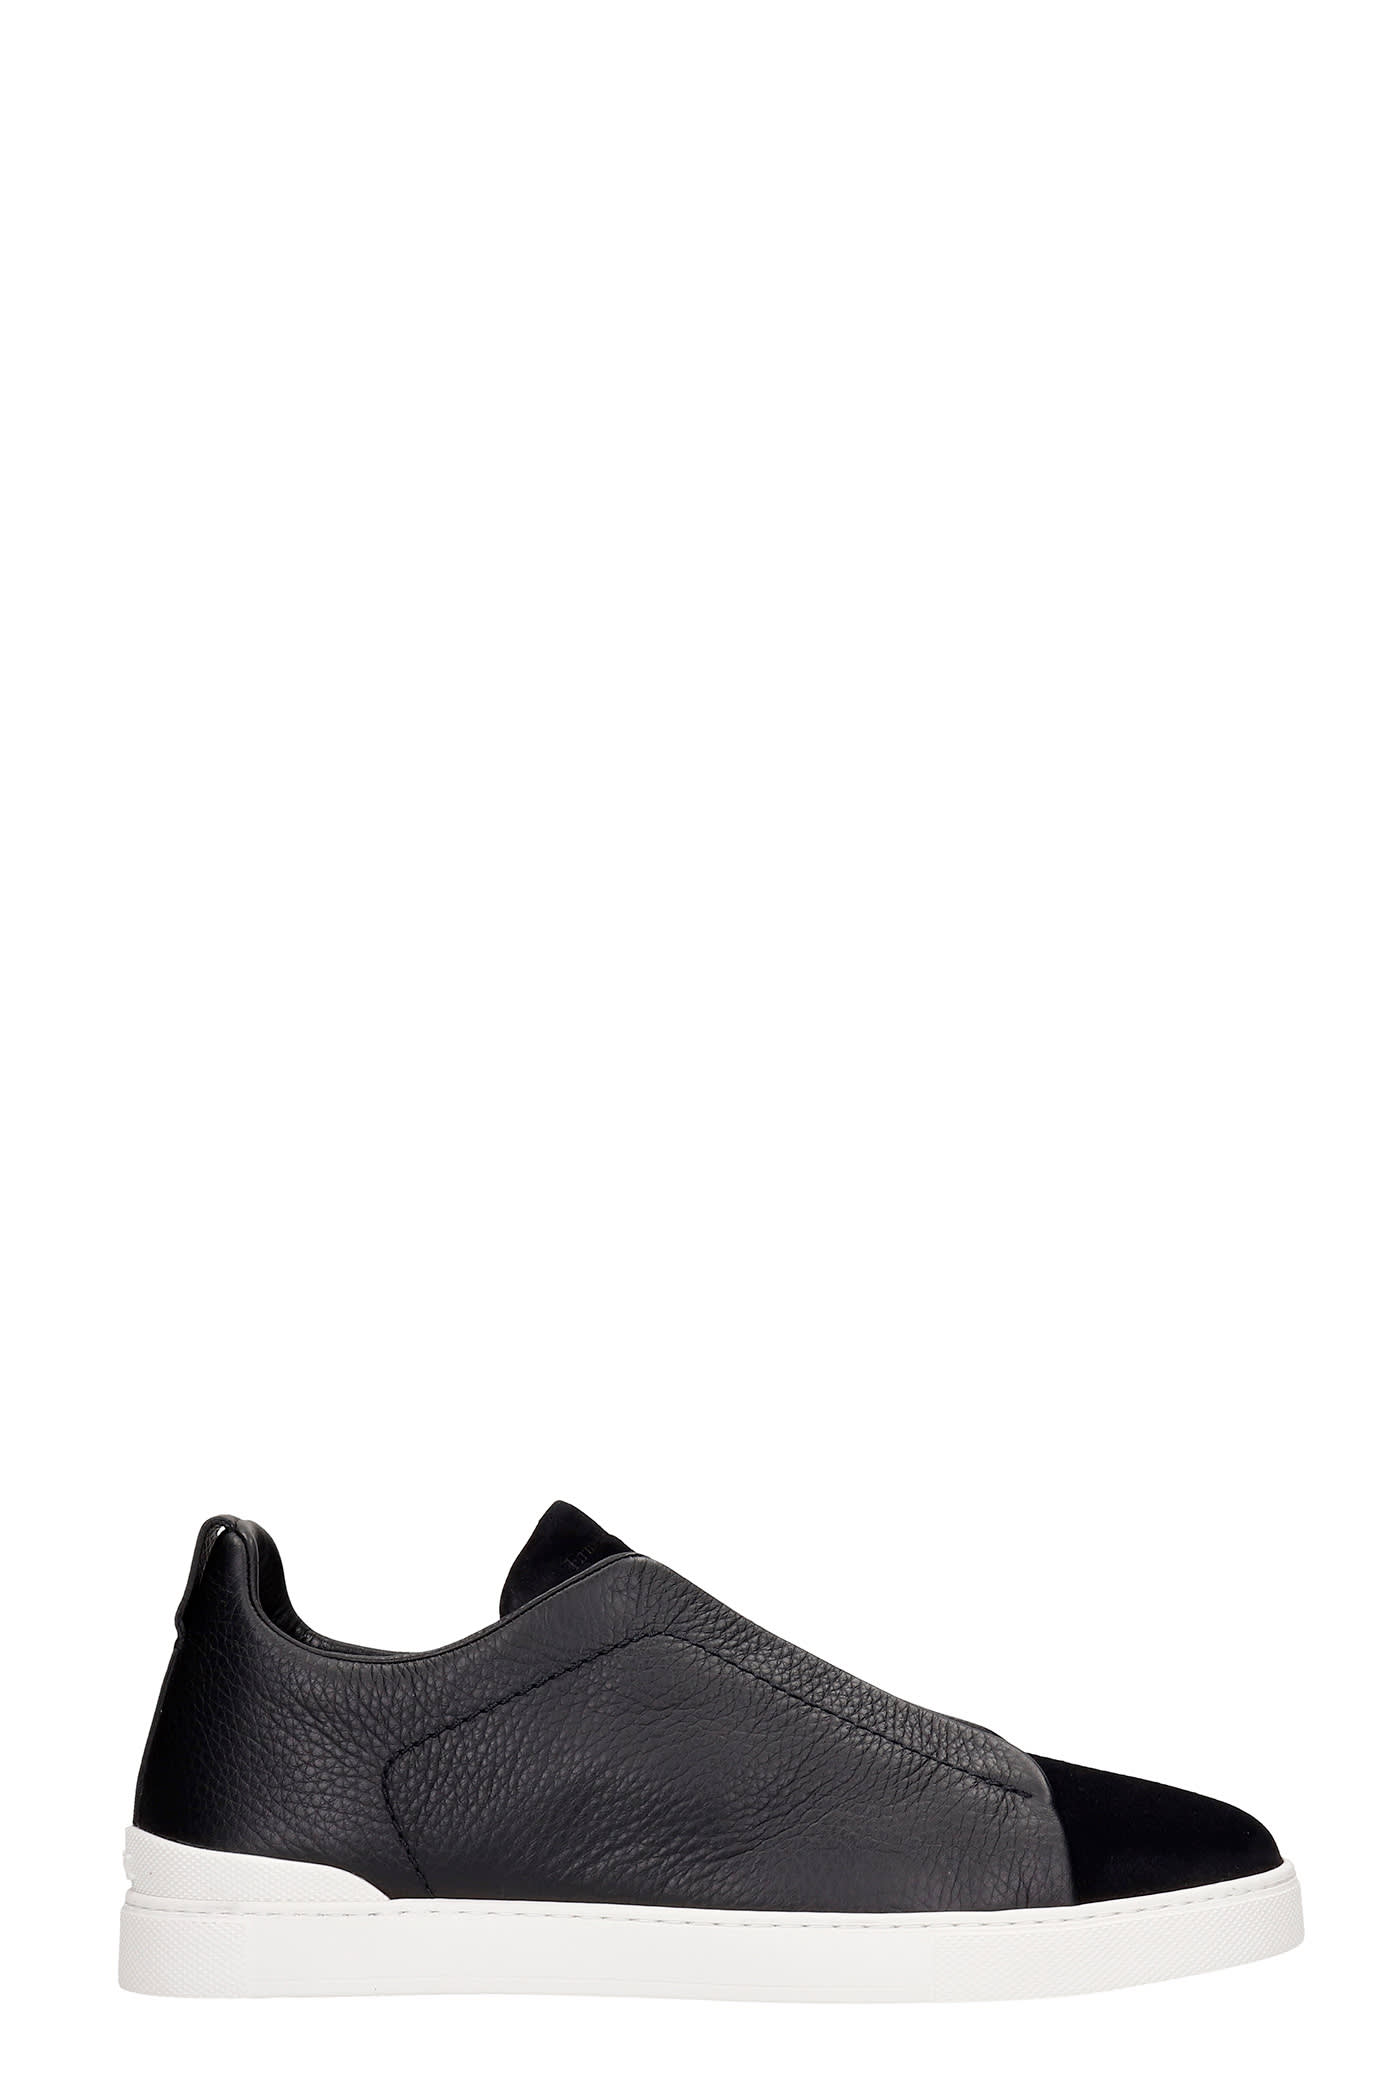 Ermenegildo Zegna Sneakers In Black Suede And Leather